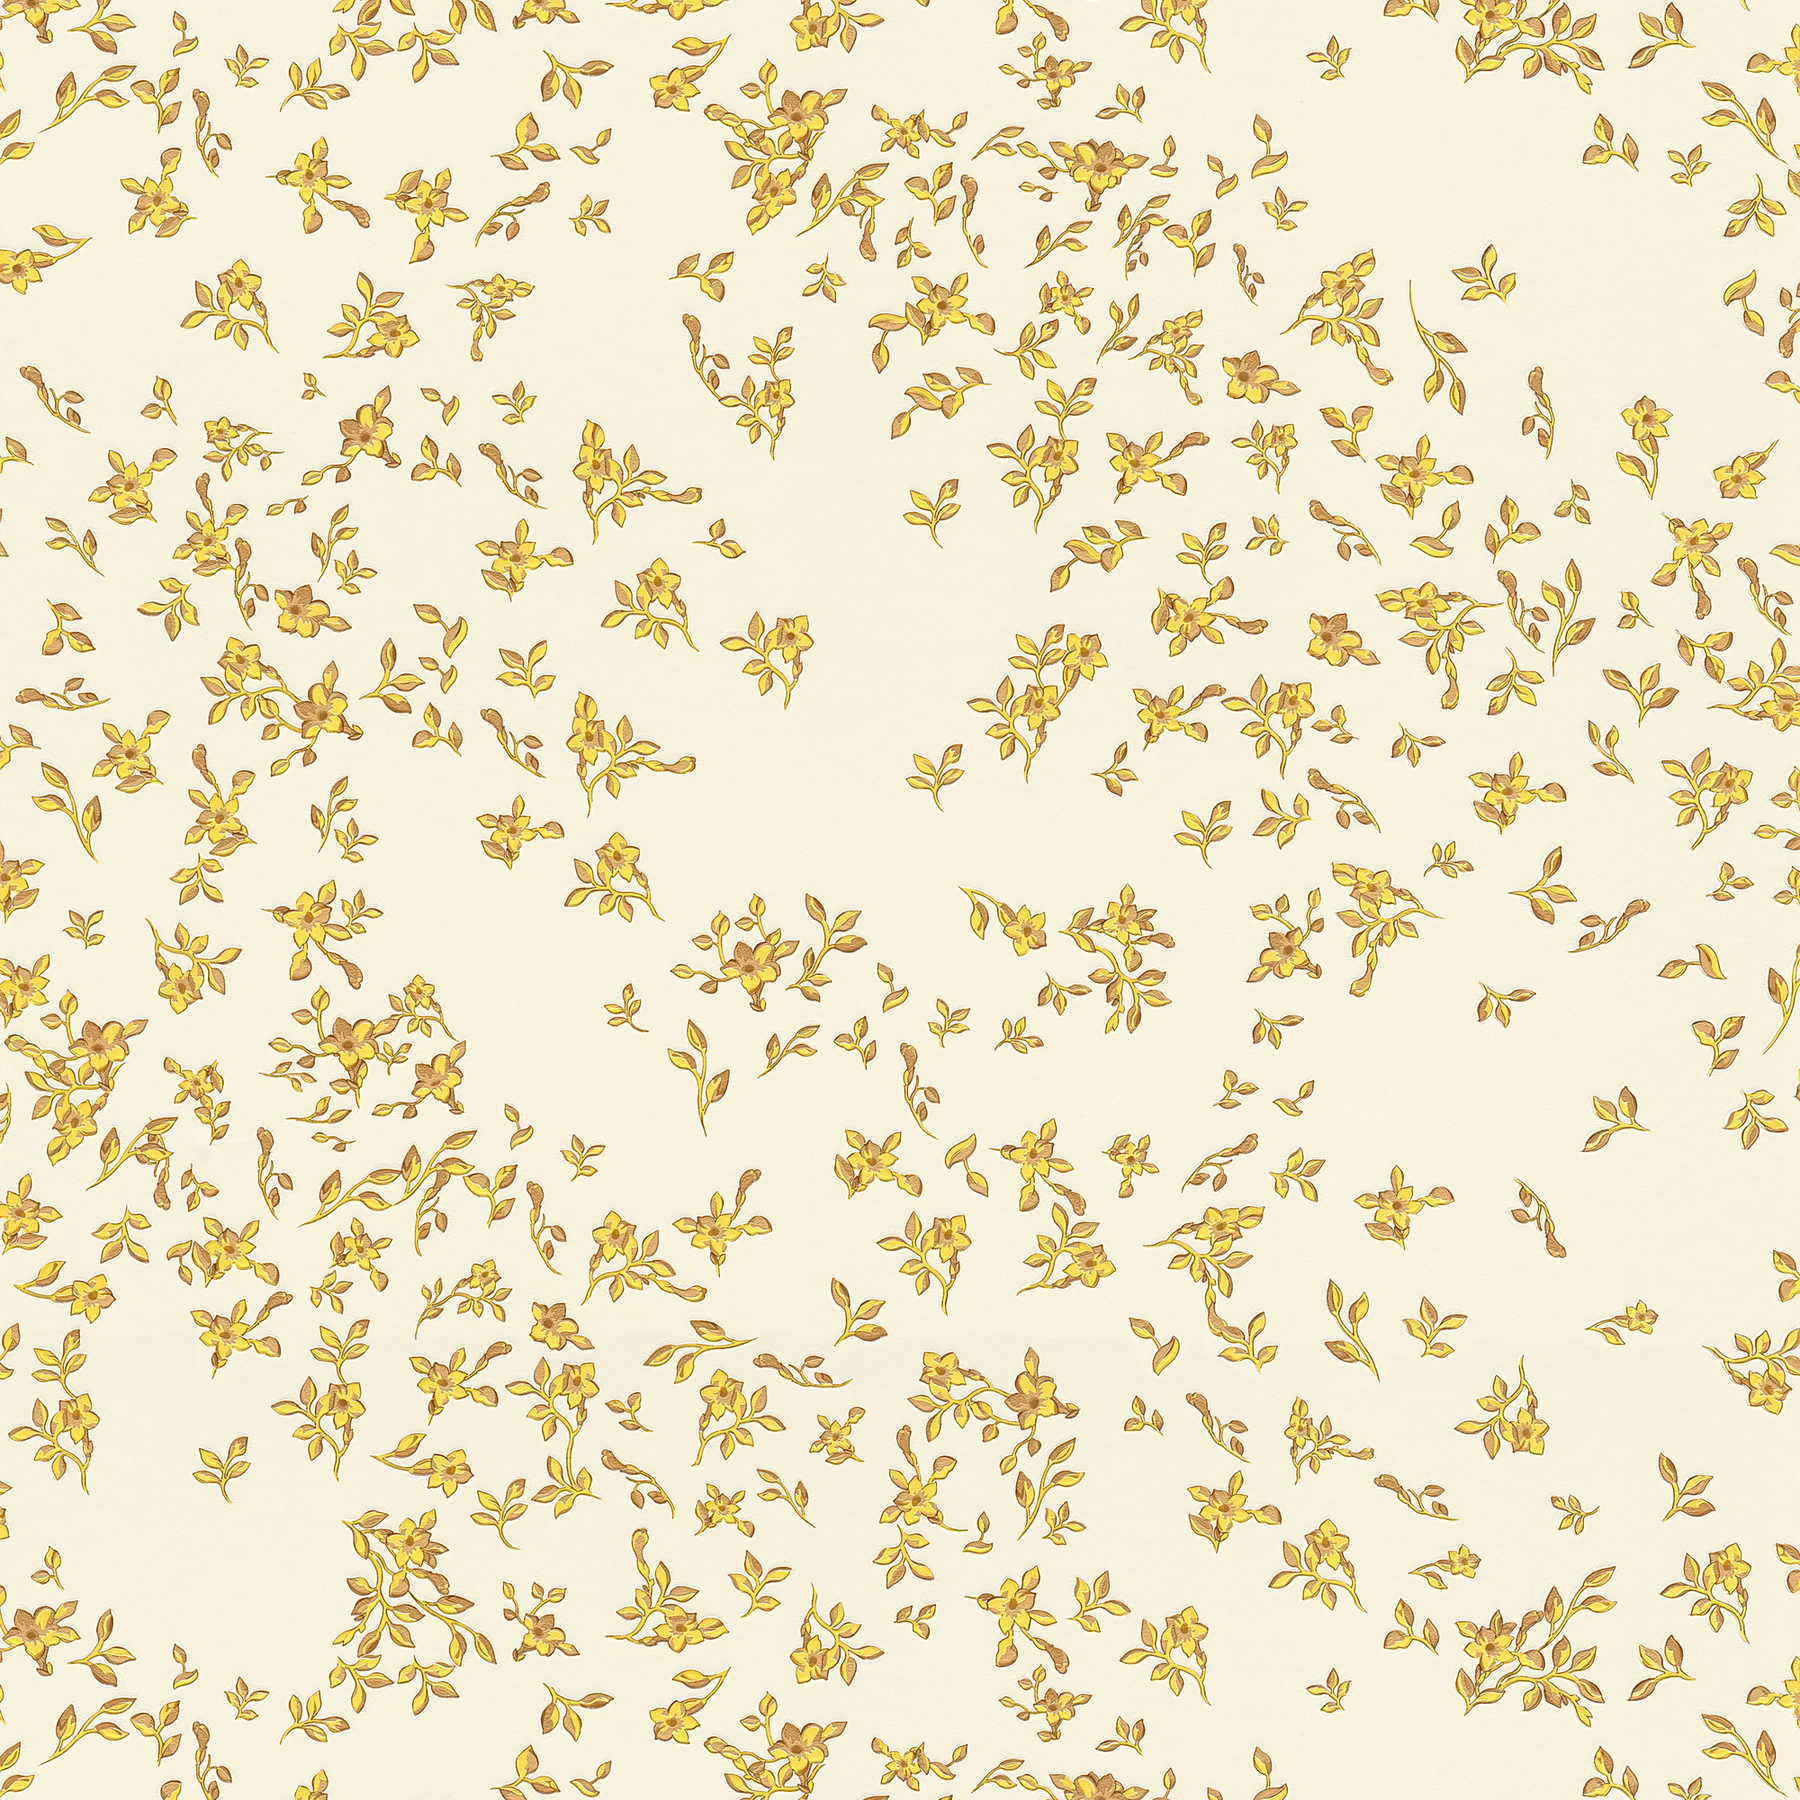 VERSACE wallpaper with fine golden flowers - gold, yellow, beige
